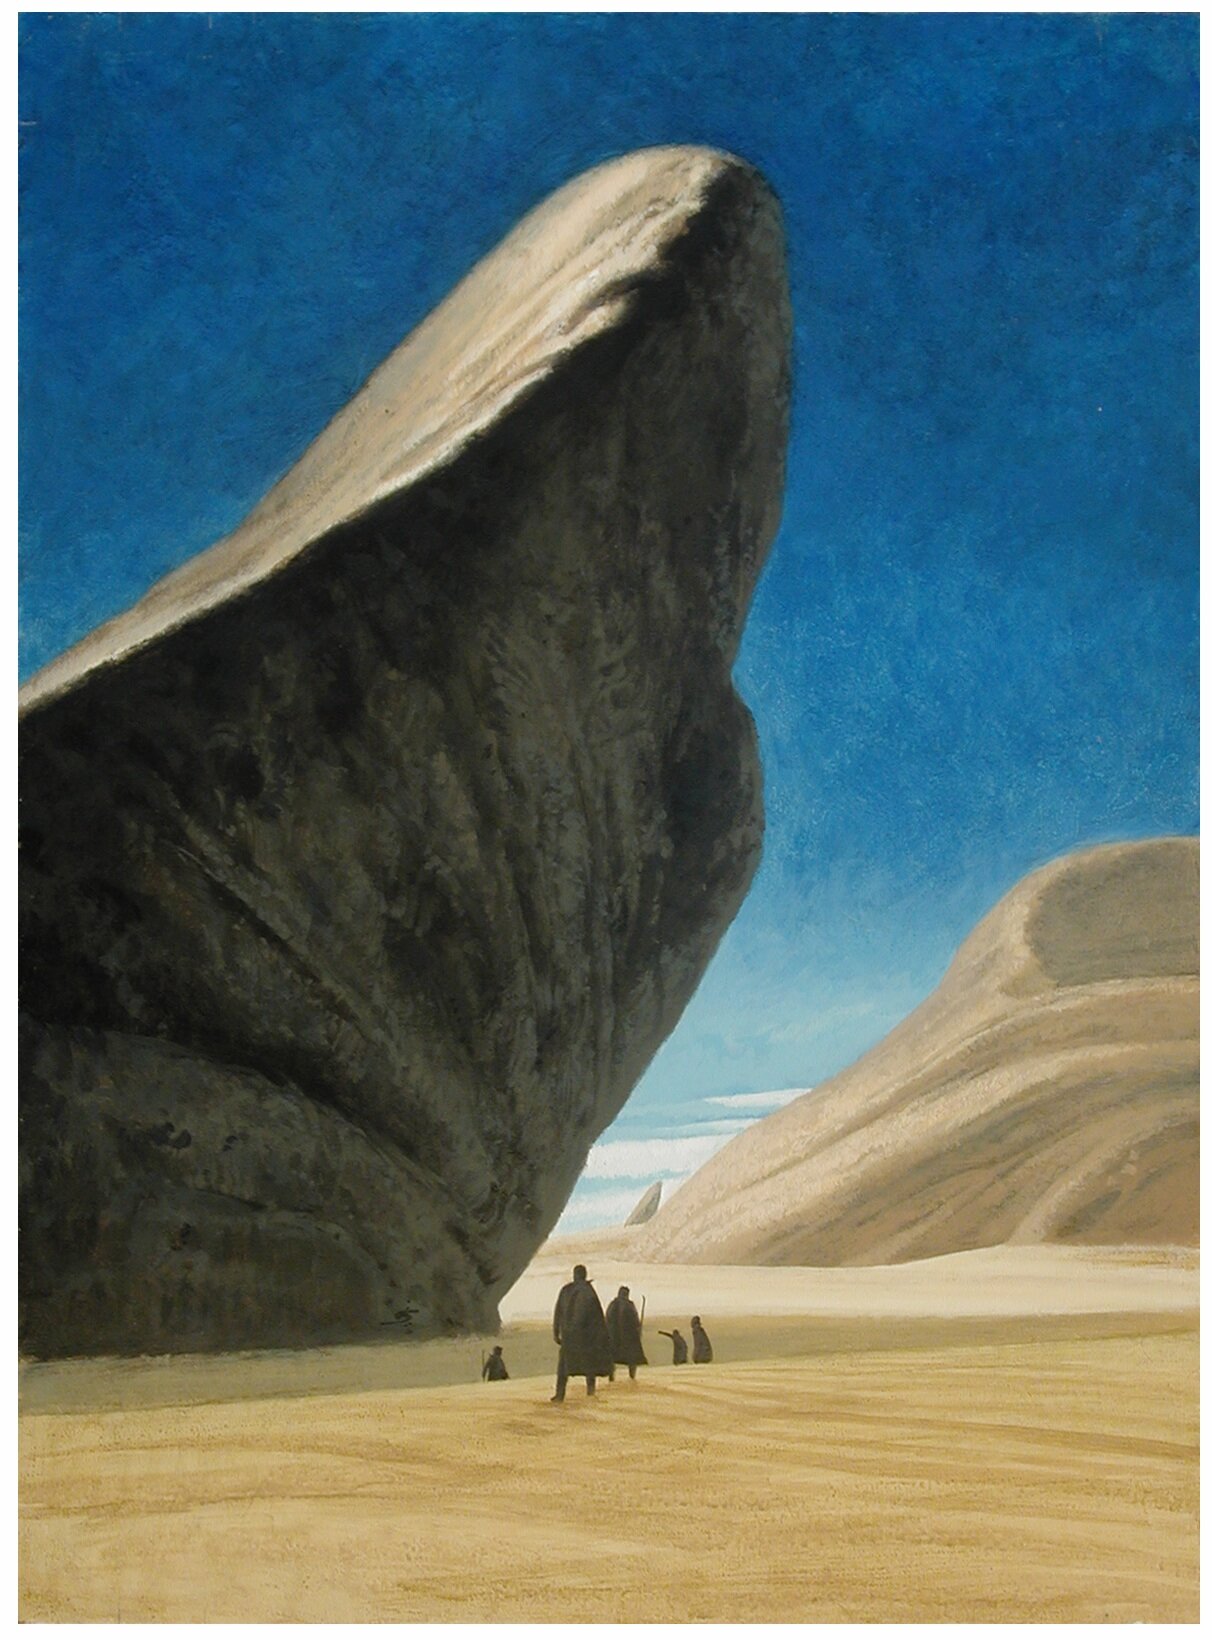 Dune.Ace.1990 copy.jpg